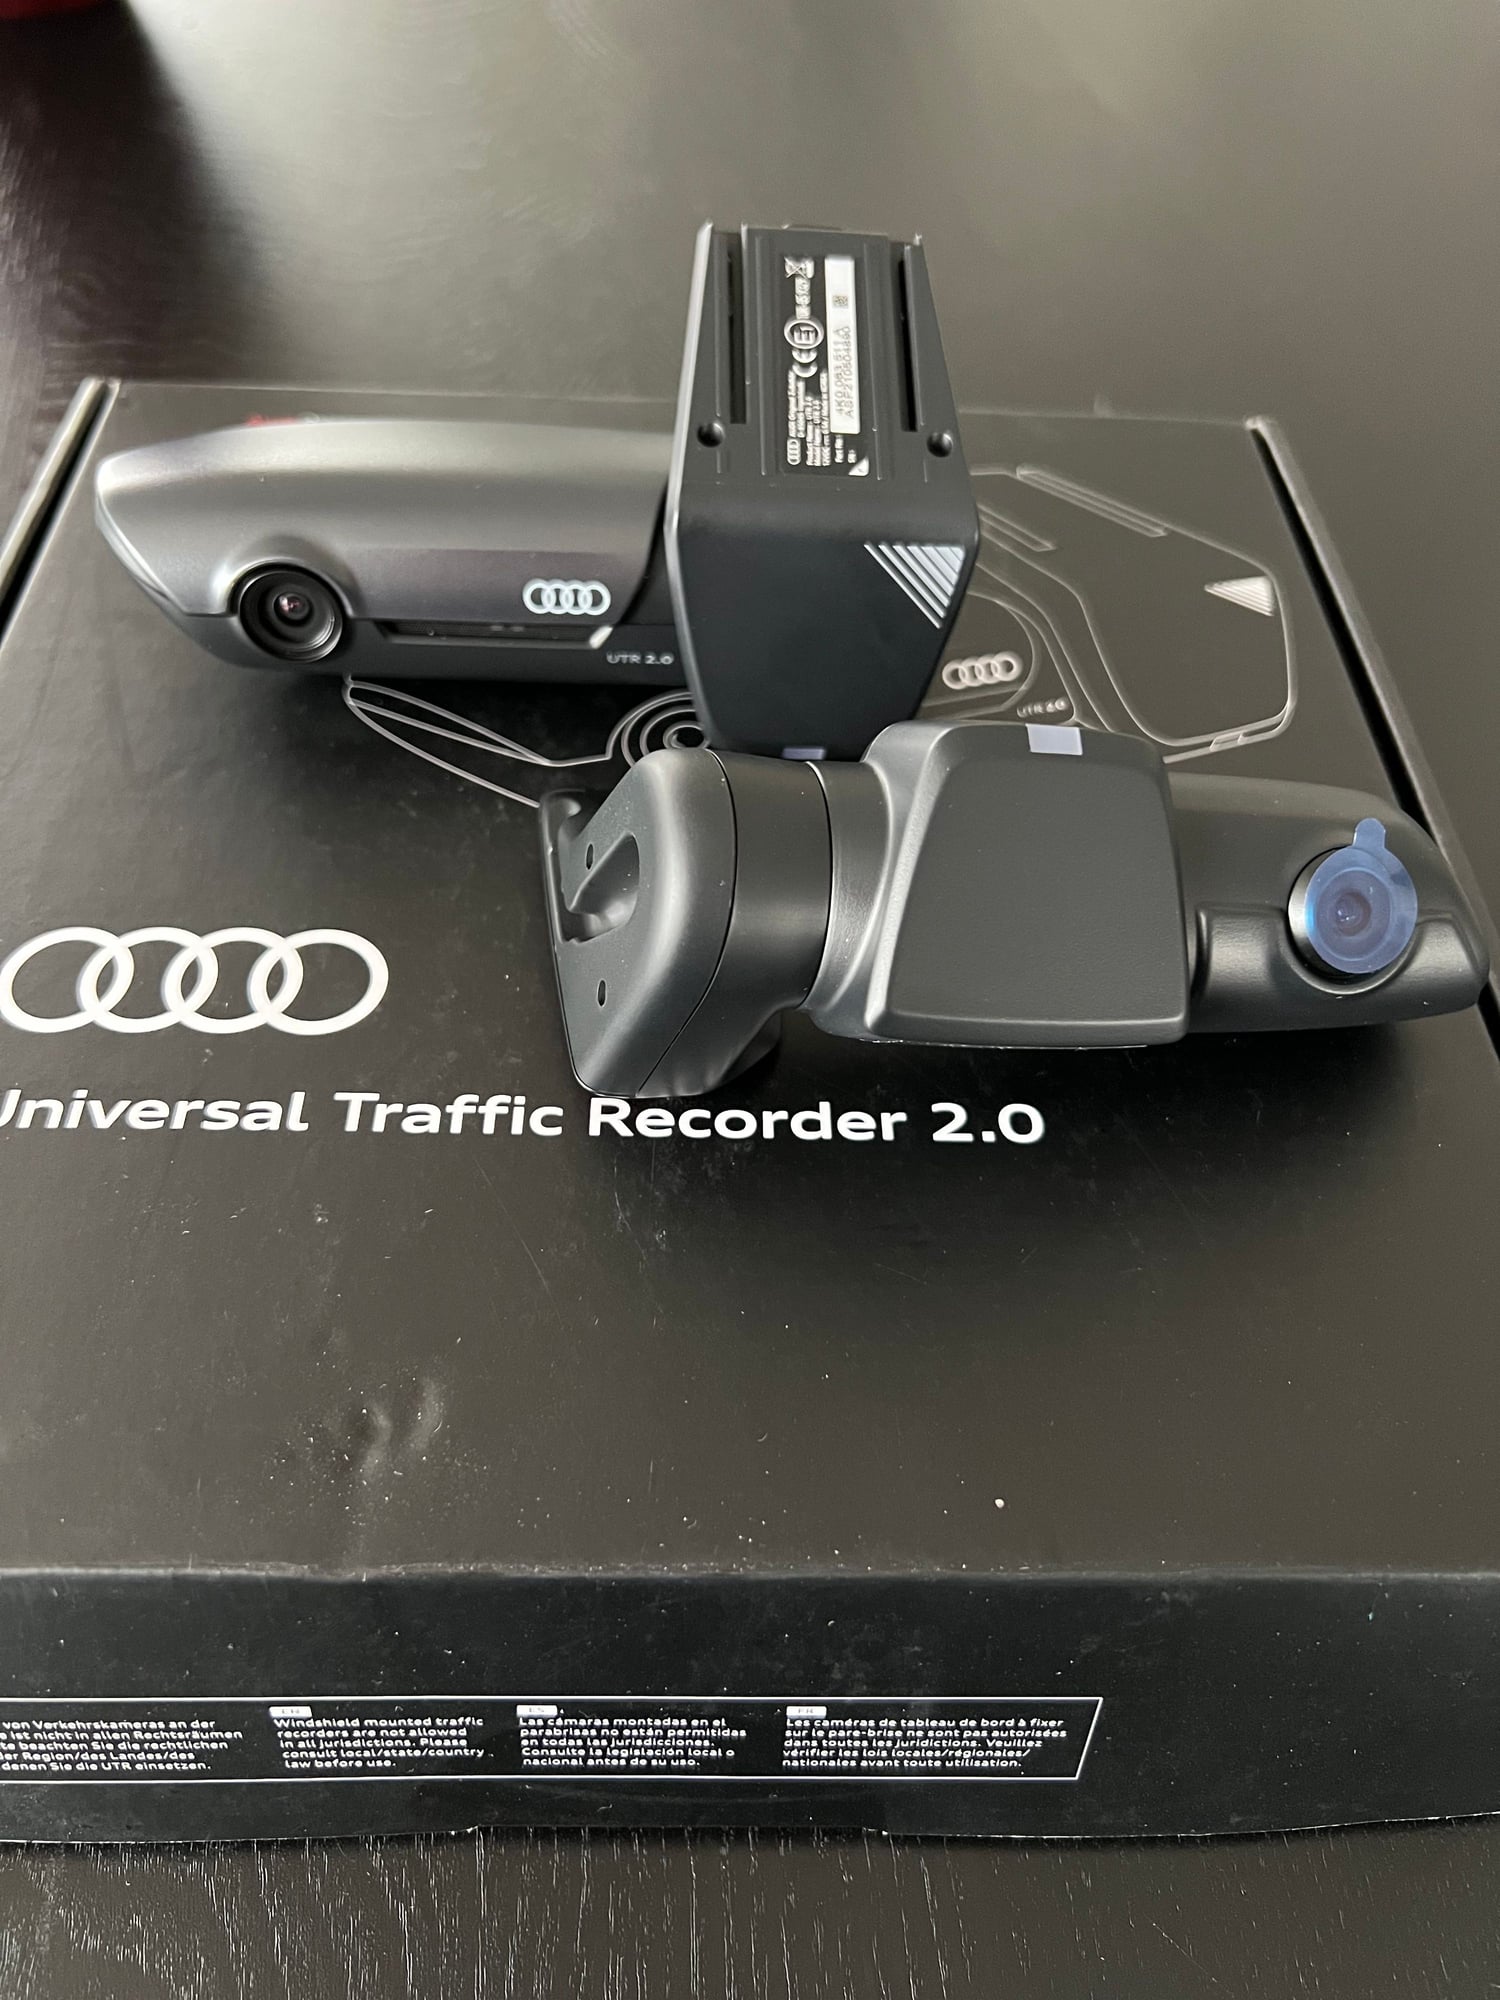 Audi Universal Traffic Recorder UTR 2.0. Newest upgraded version